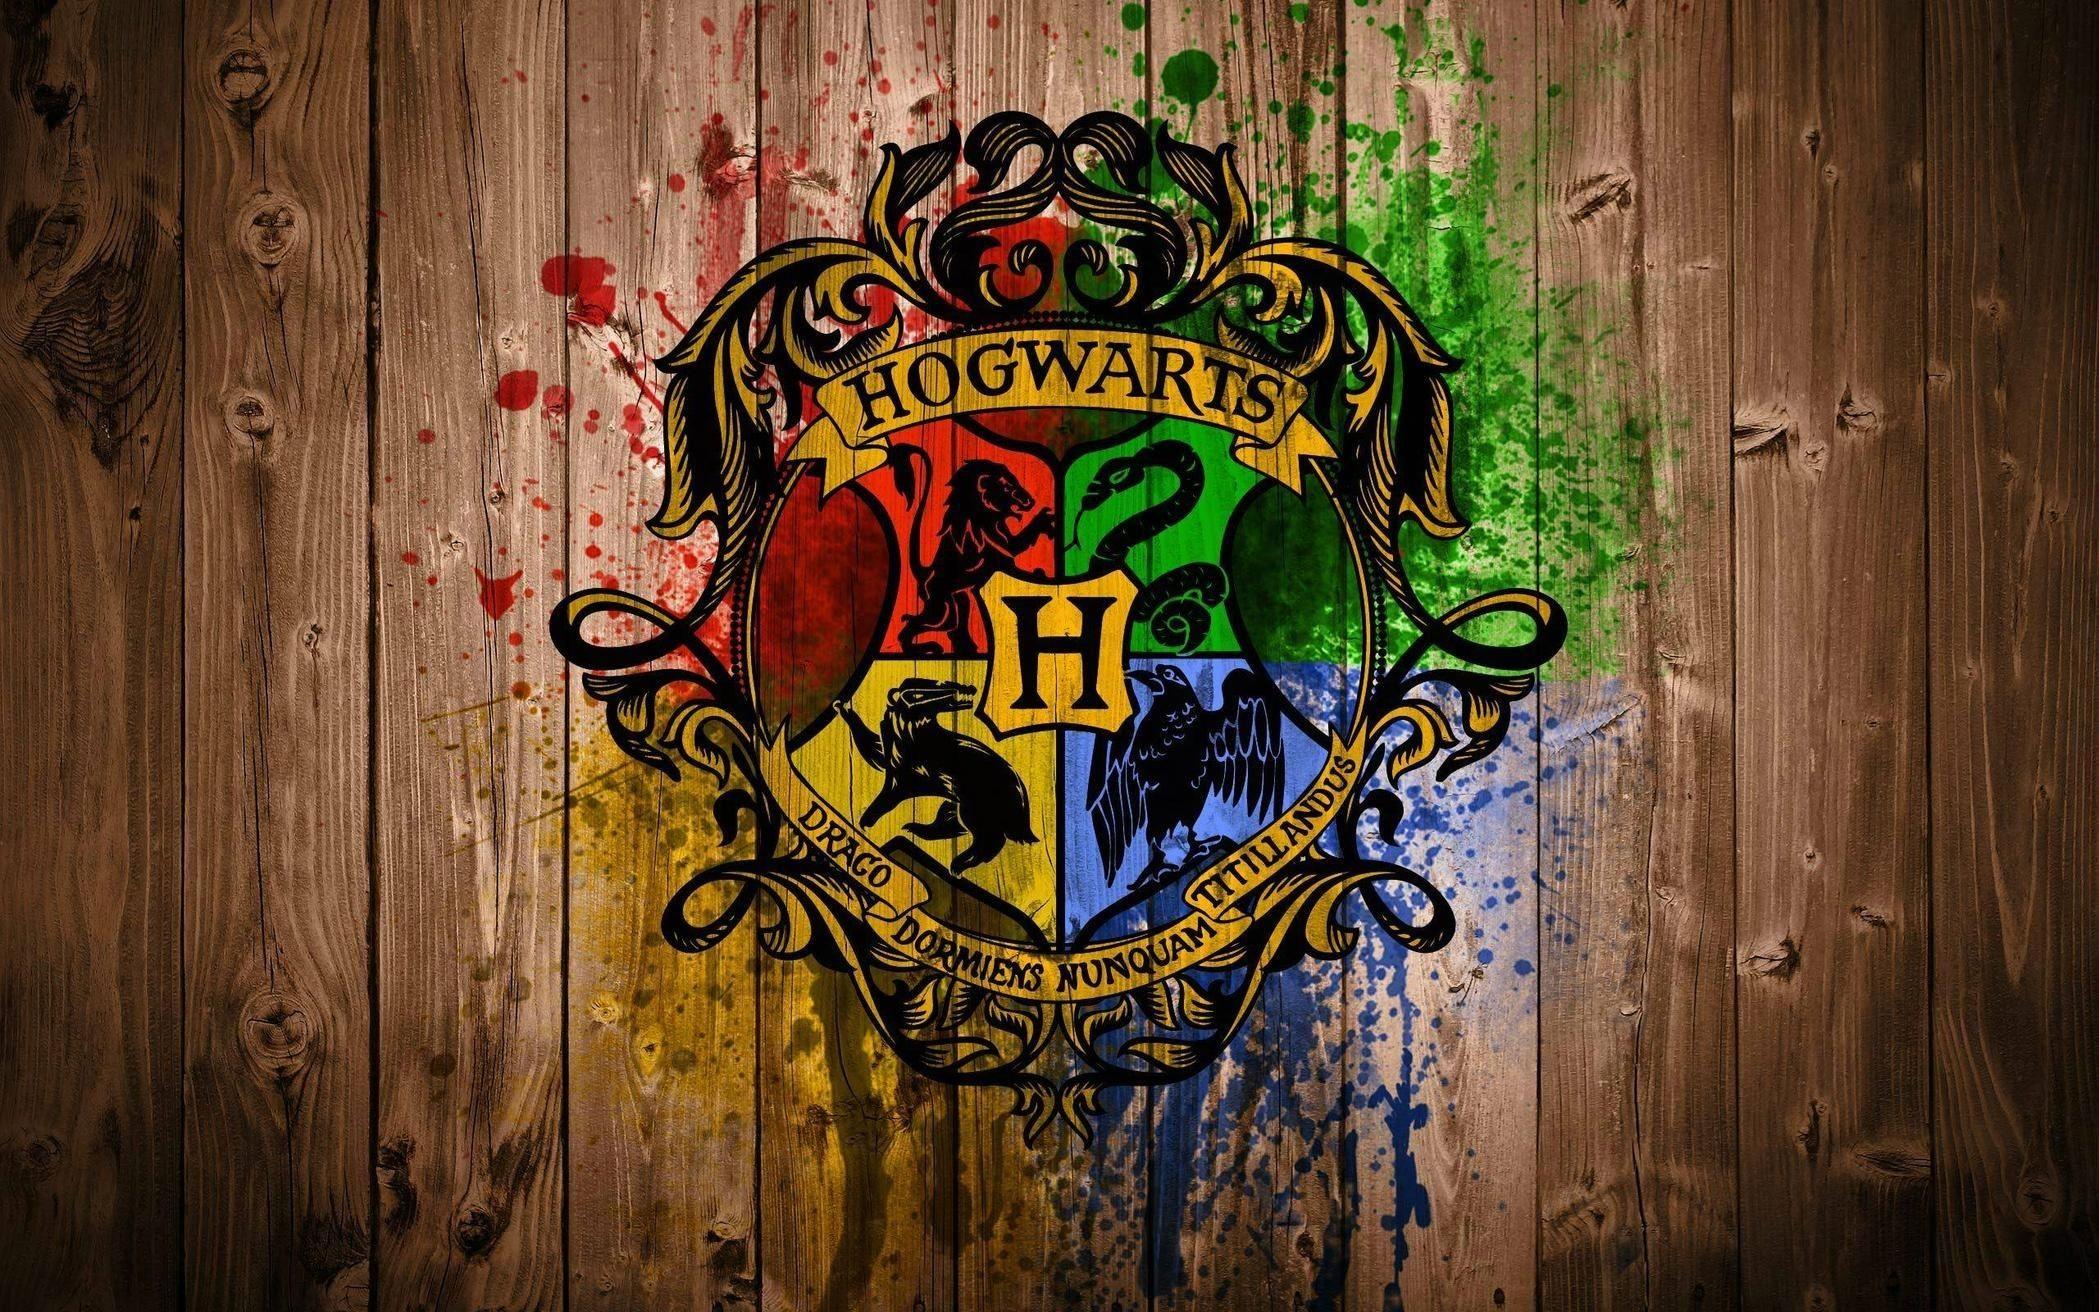 Desktop Harry Potter Wallpaper